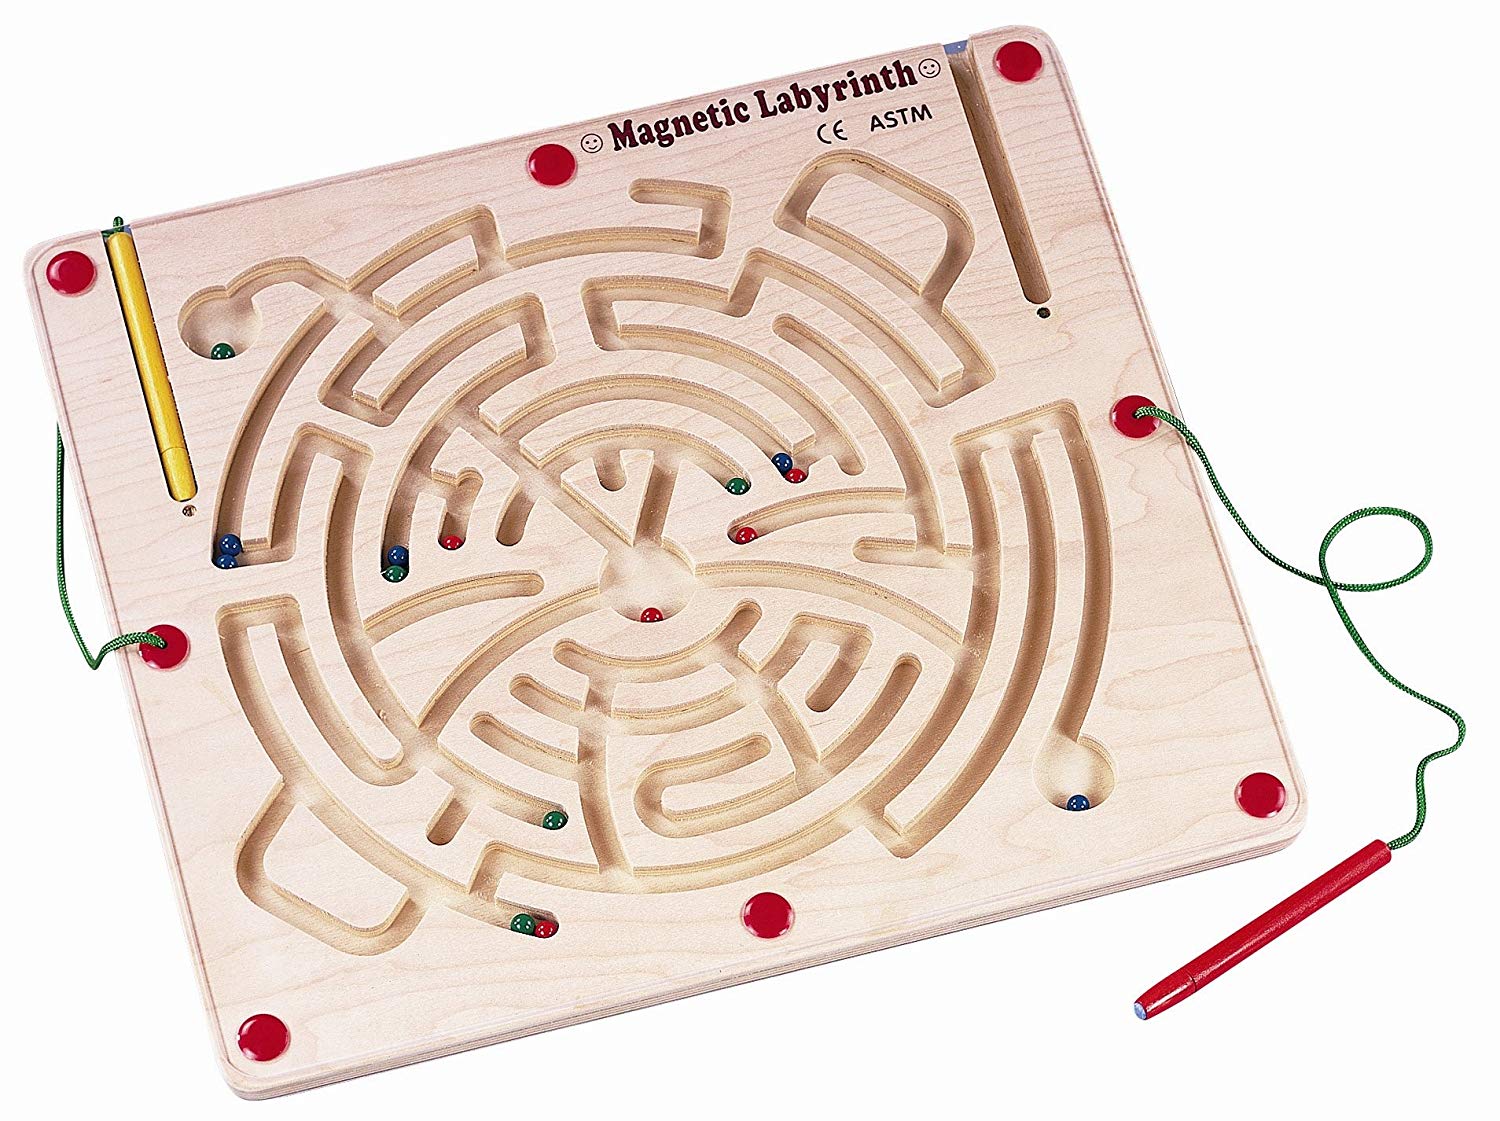 Magnetic Labyrinth 131